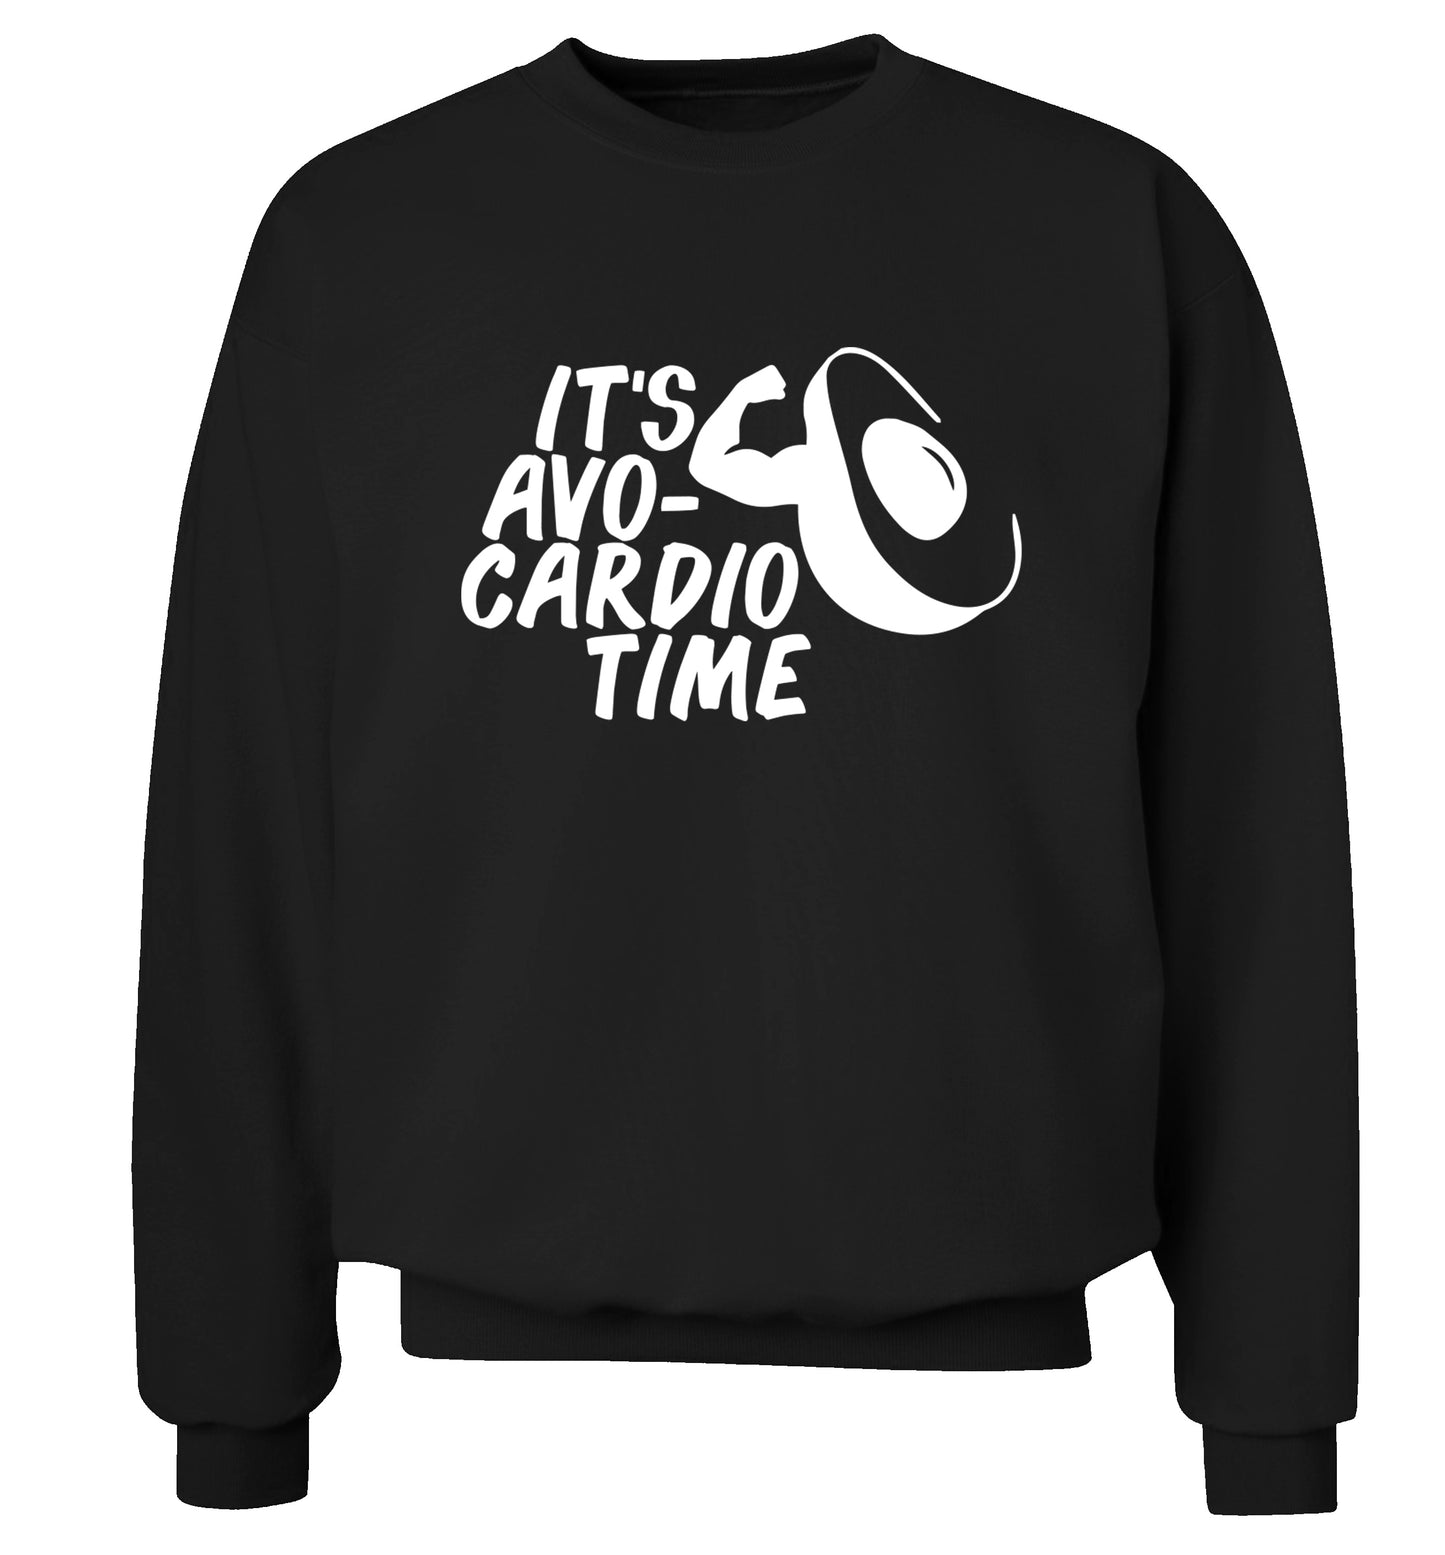 It's avo-cardio time Adult's unisex black Sweater 2XL